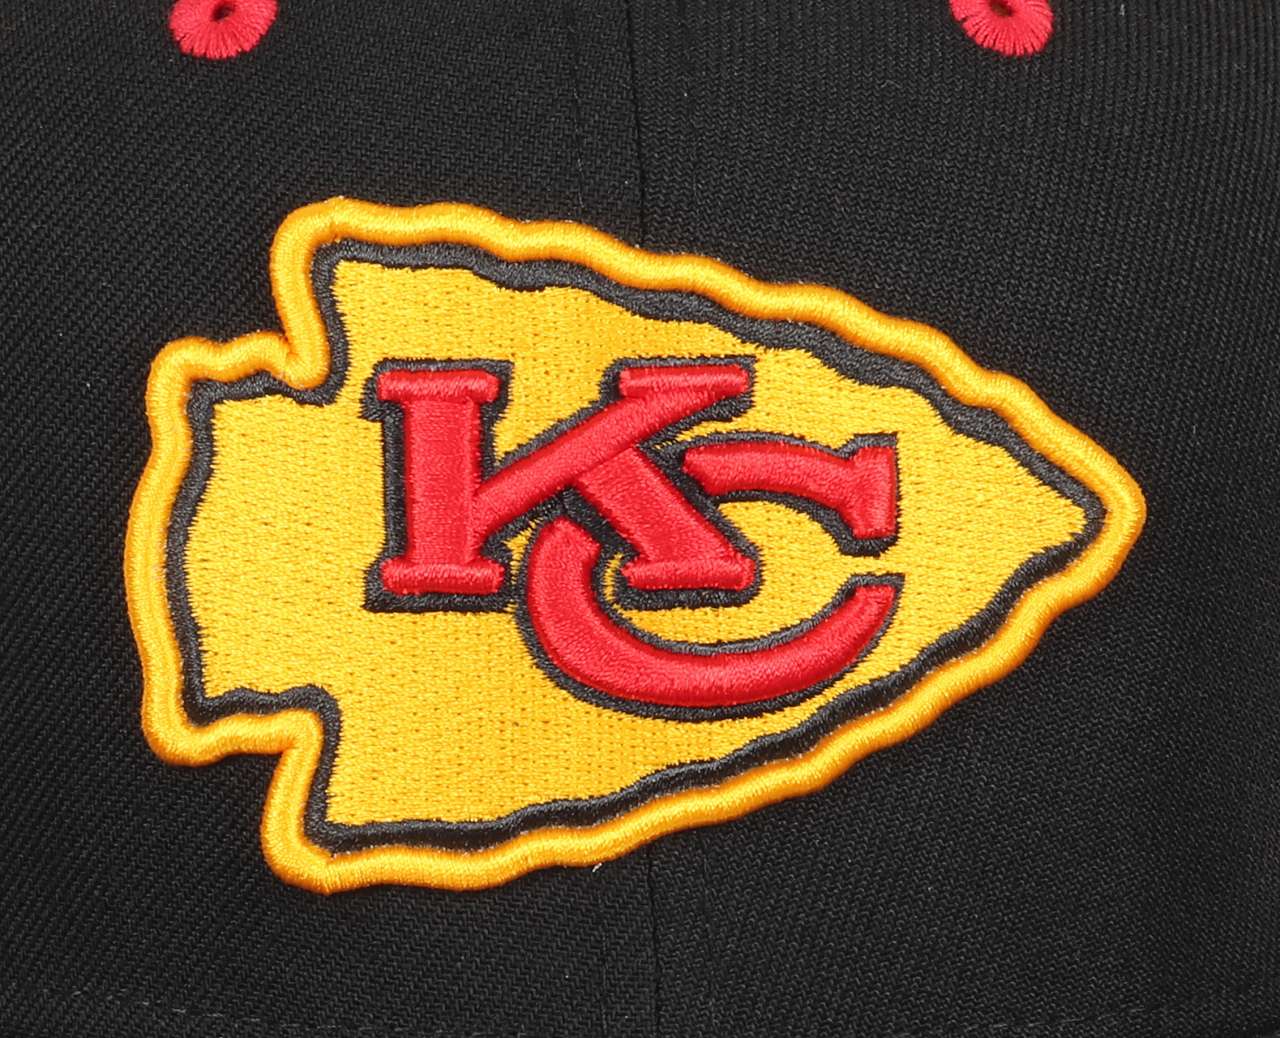 Kansas City Chiefs NFL Team Colour 60 Seasons Sidepatch Black 9Fifty Snapback Cap New Era